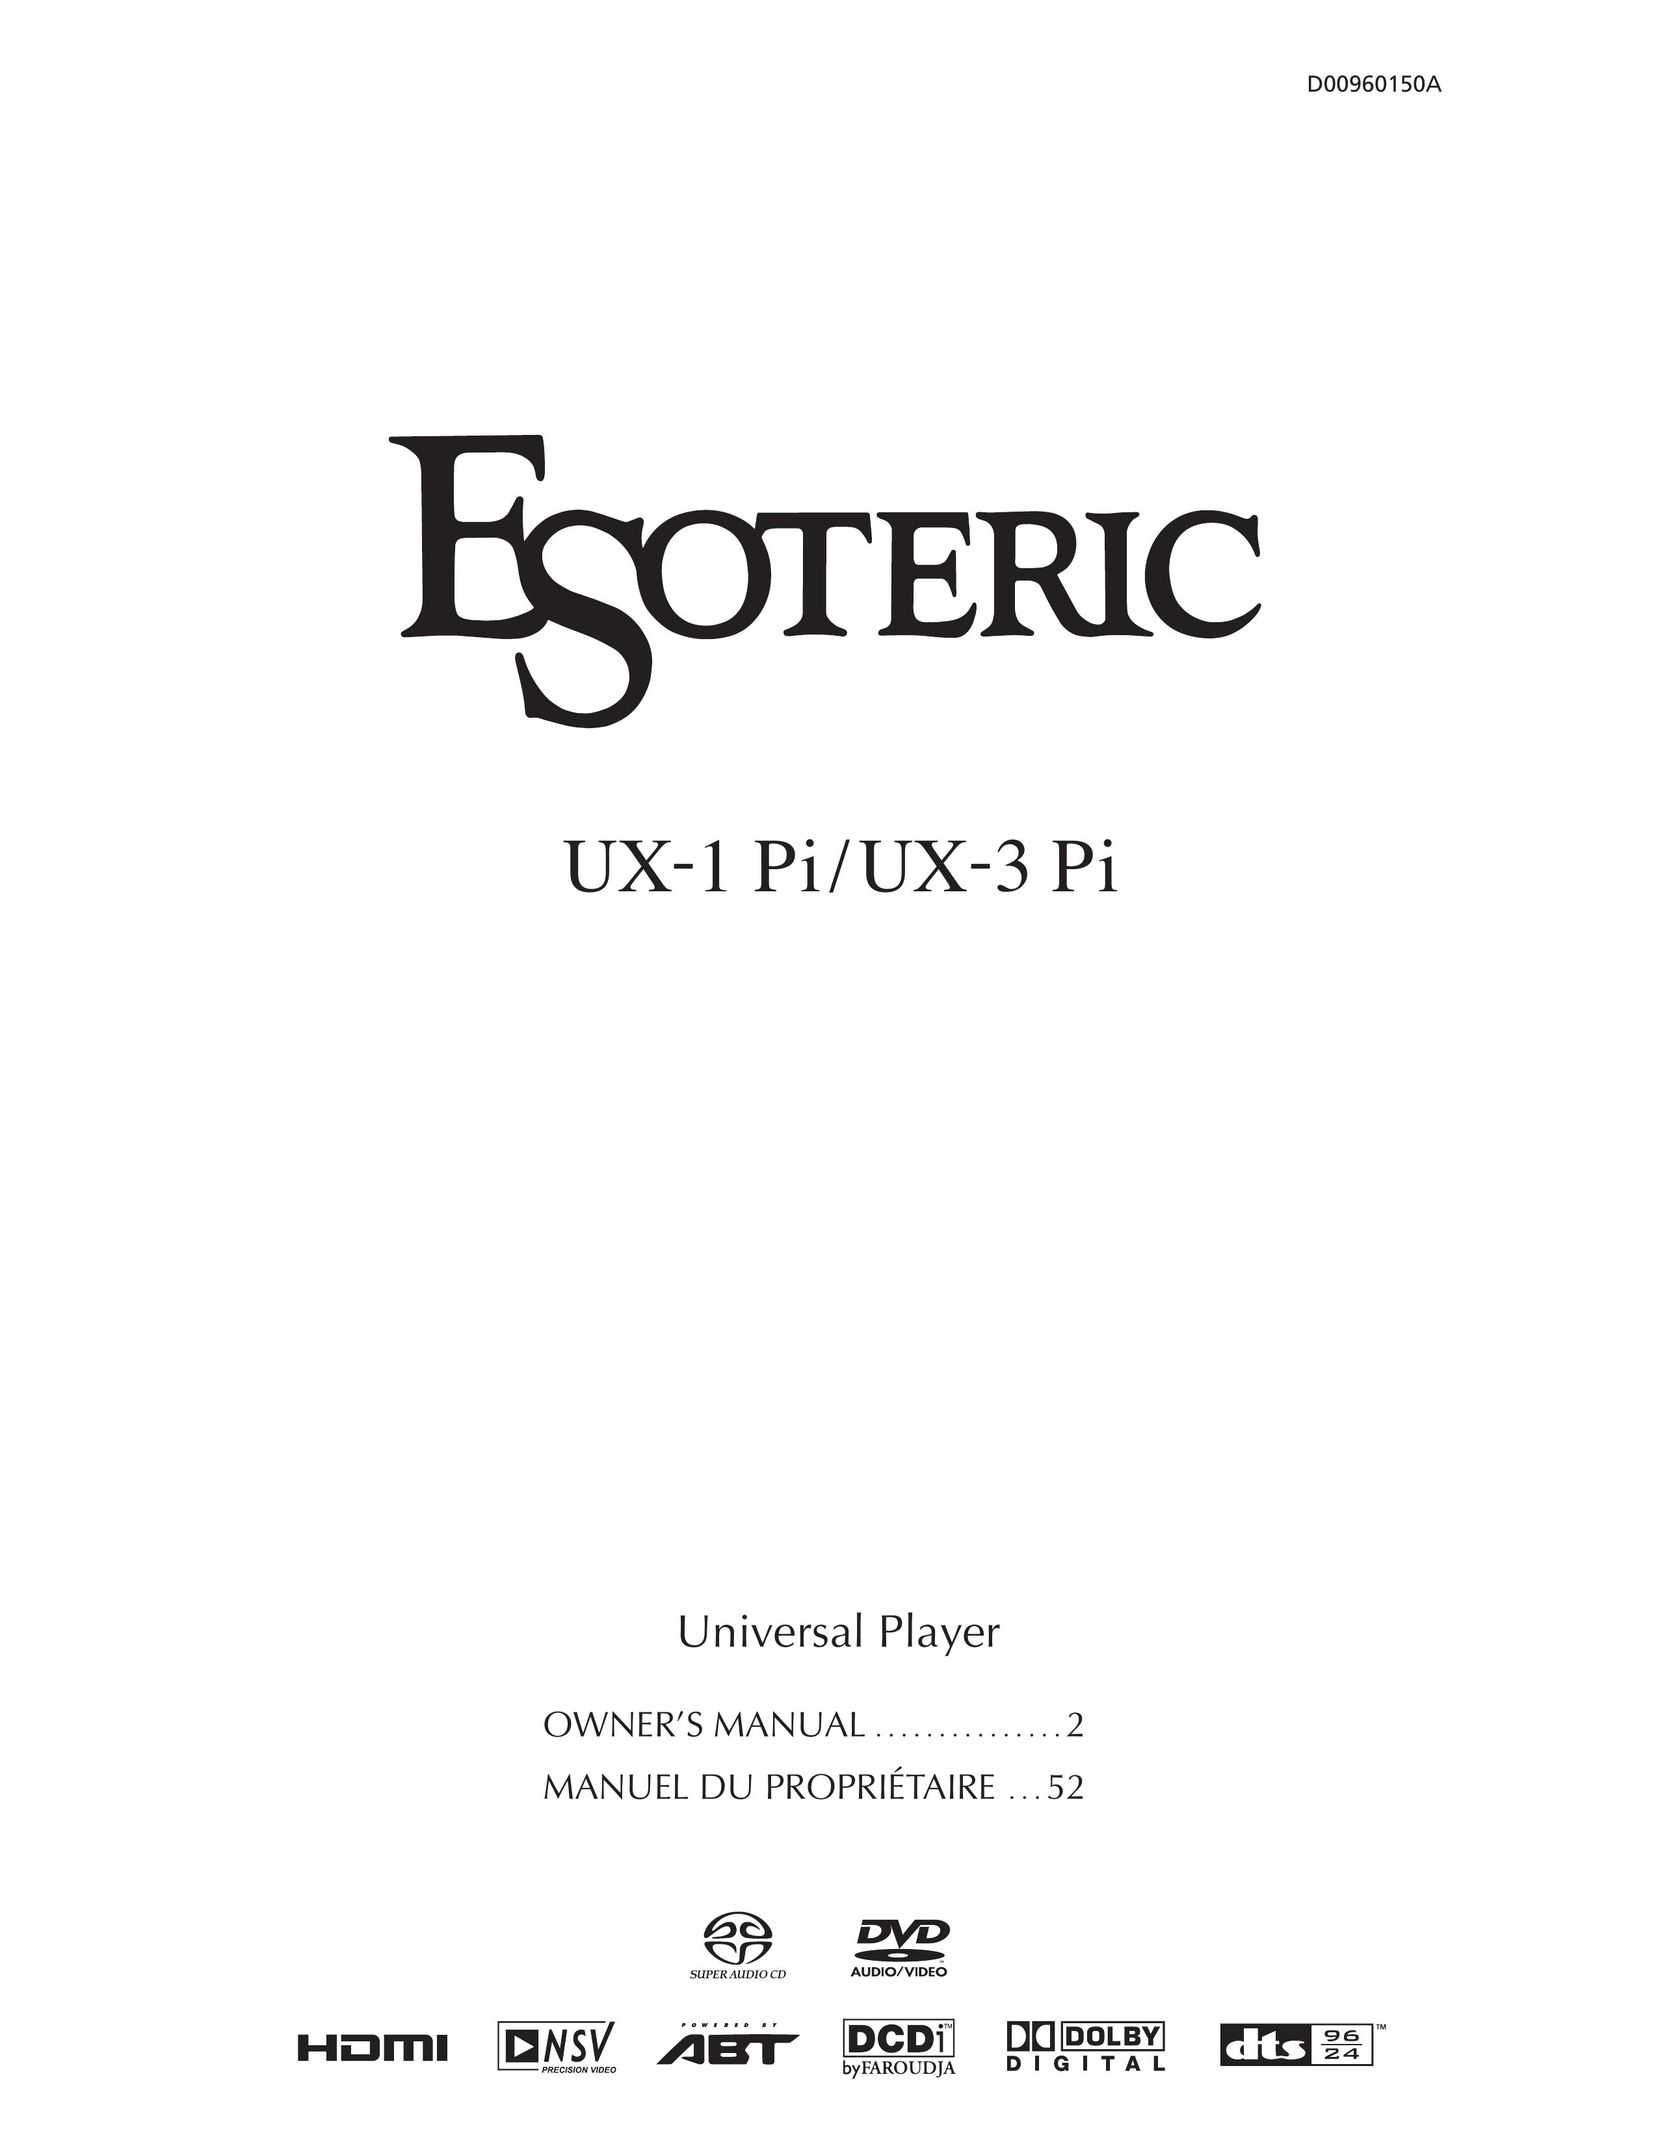 Esoteric UX-3 Pi TV DVD Combo User Manual